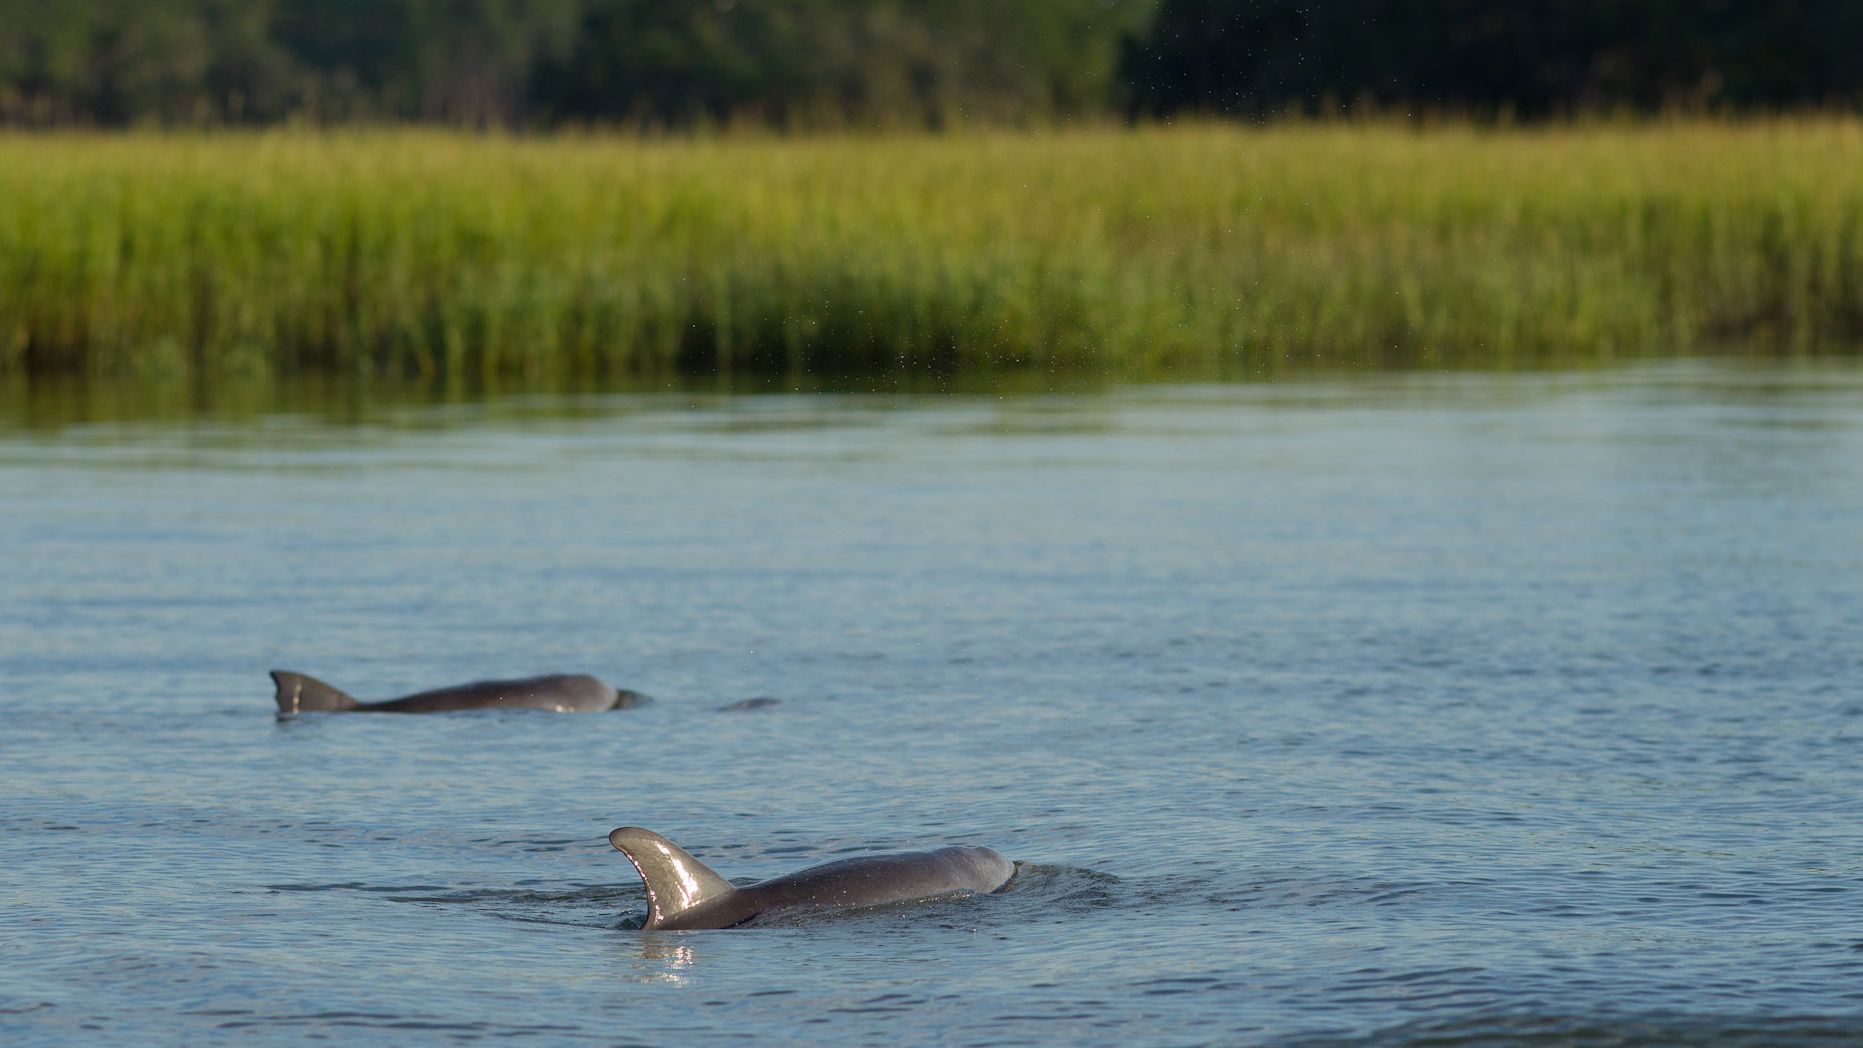 Explore the wildlife on the Savannah Wildlife Refuge or Coastal Dolphin Eco Tours!